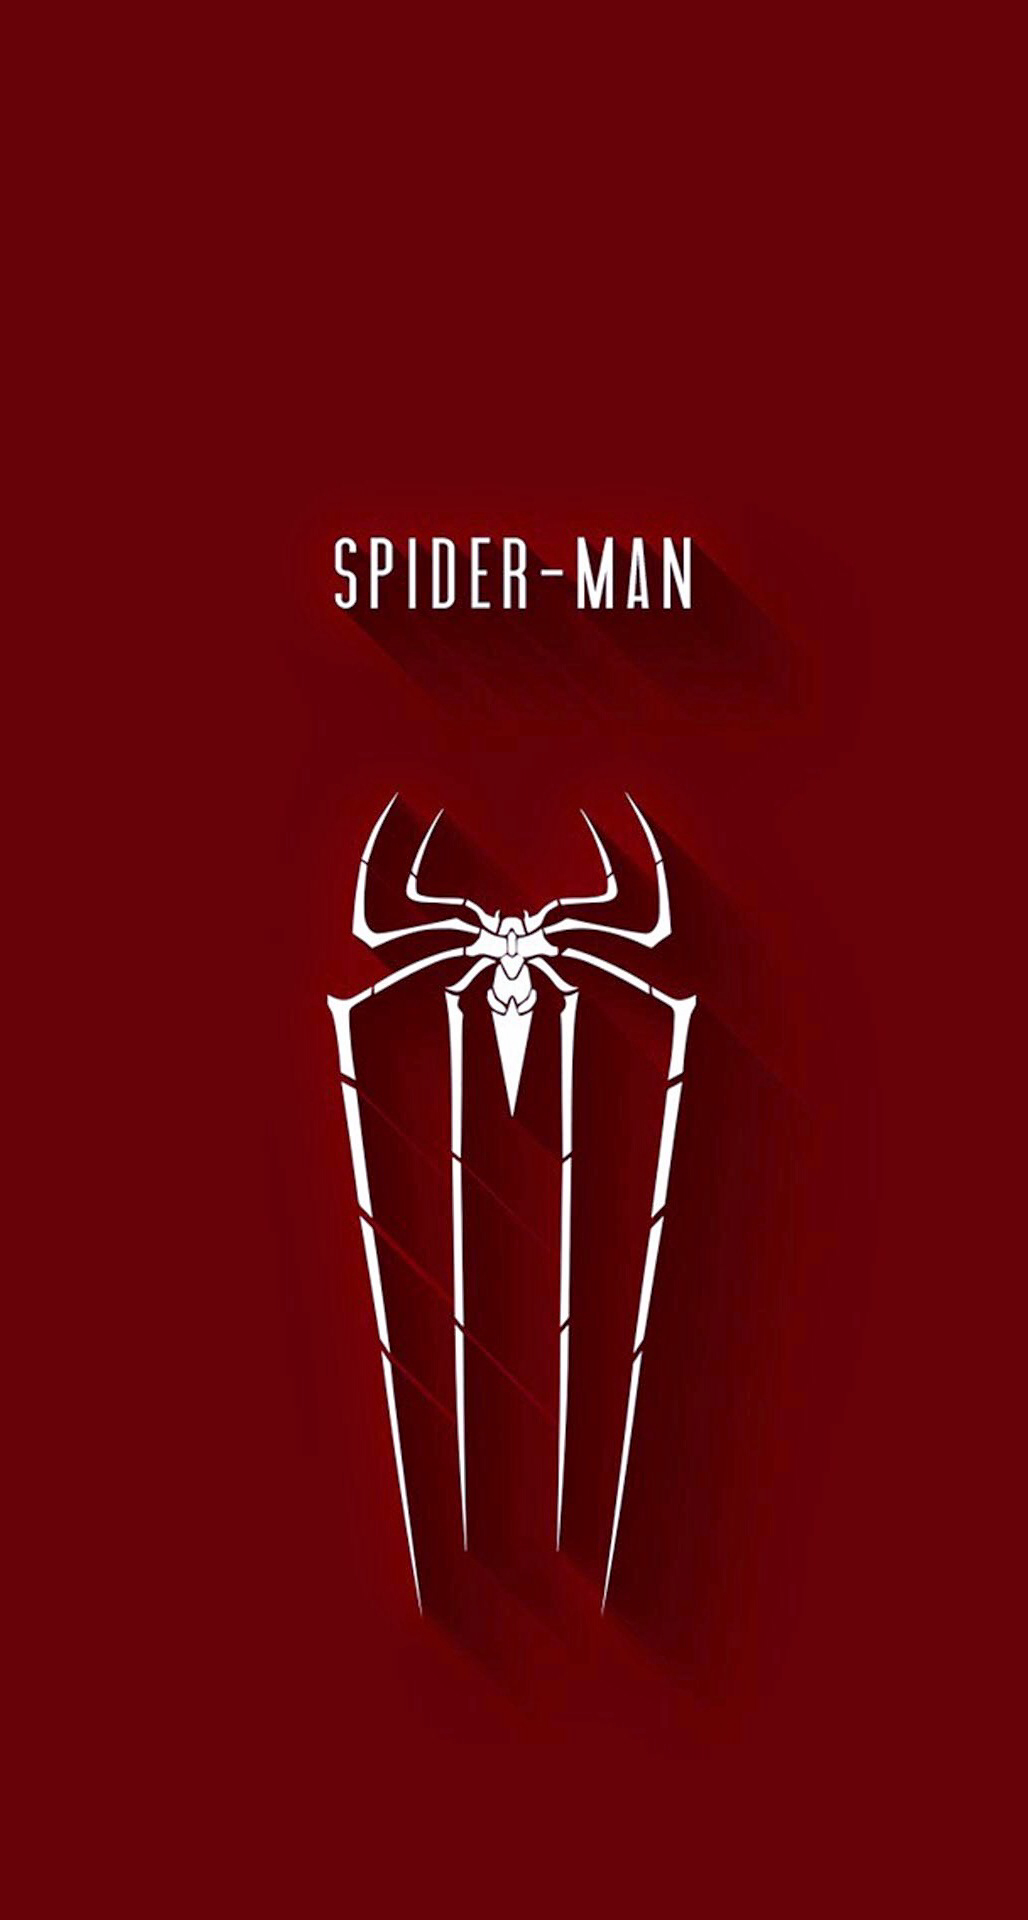 Spiderman logo spidey logos and marvel jpg